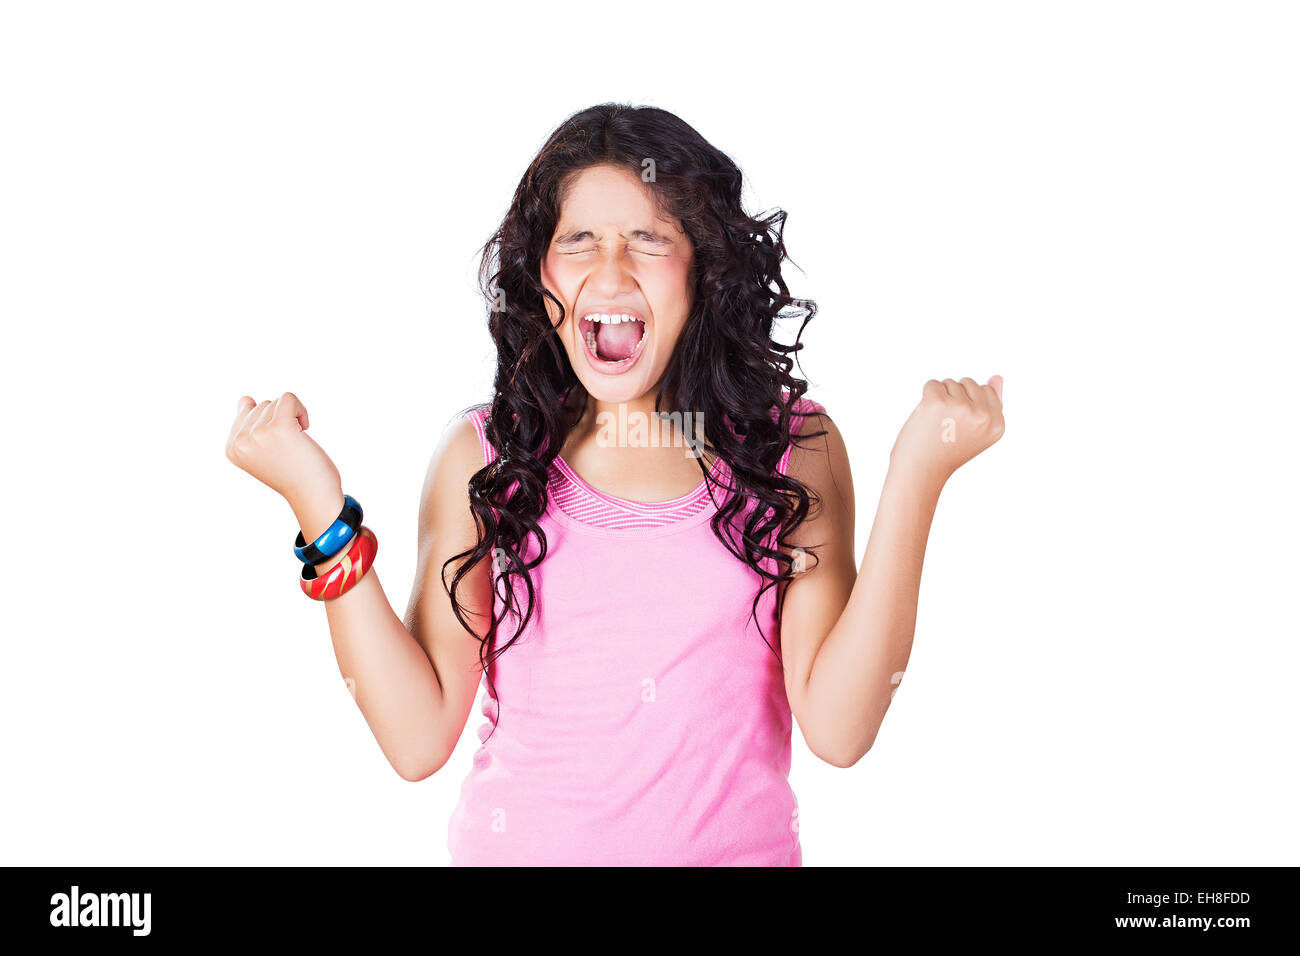 1 indian Young girl Teenager Shouting Stock Photo